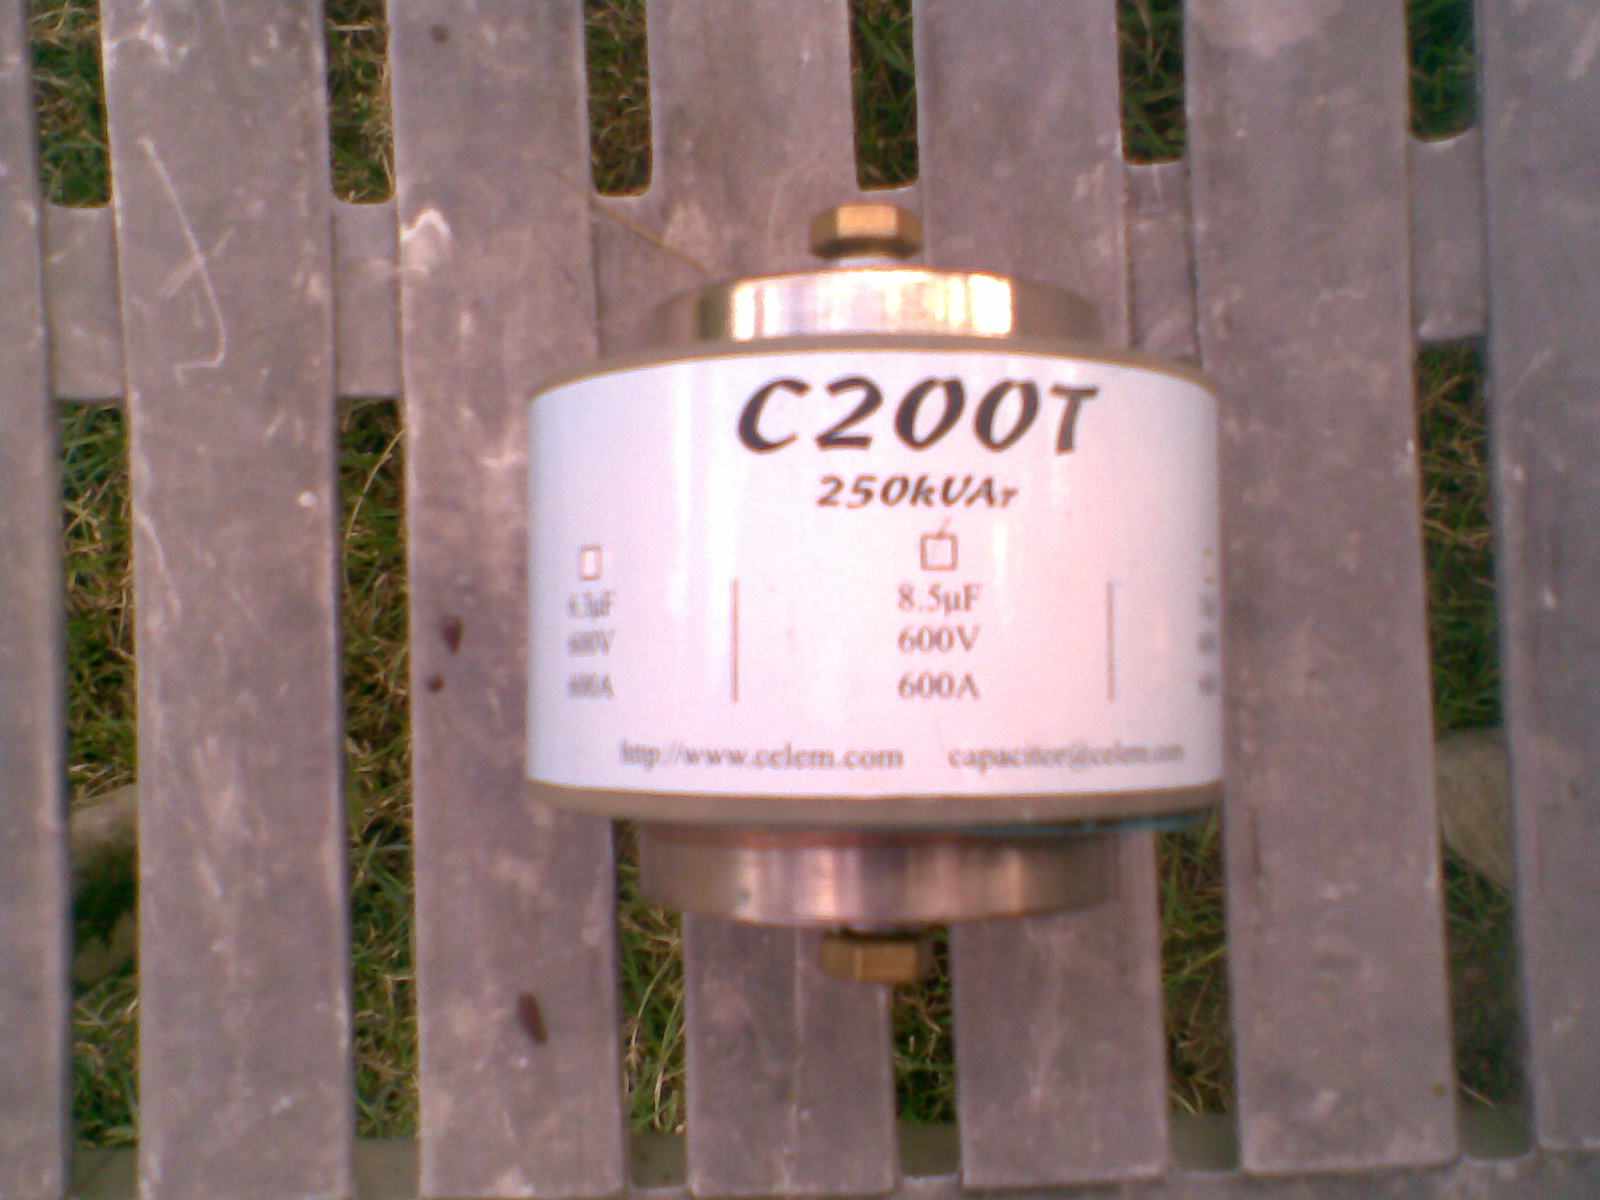 C200T- 8,5u,600V,600A